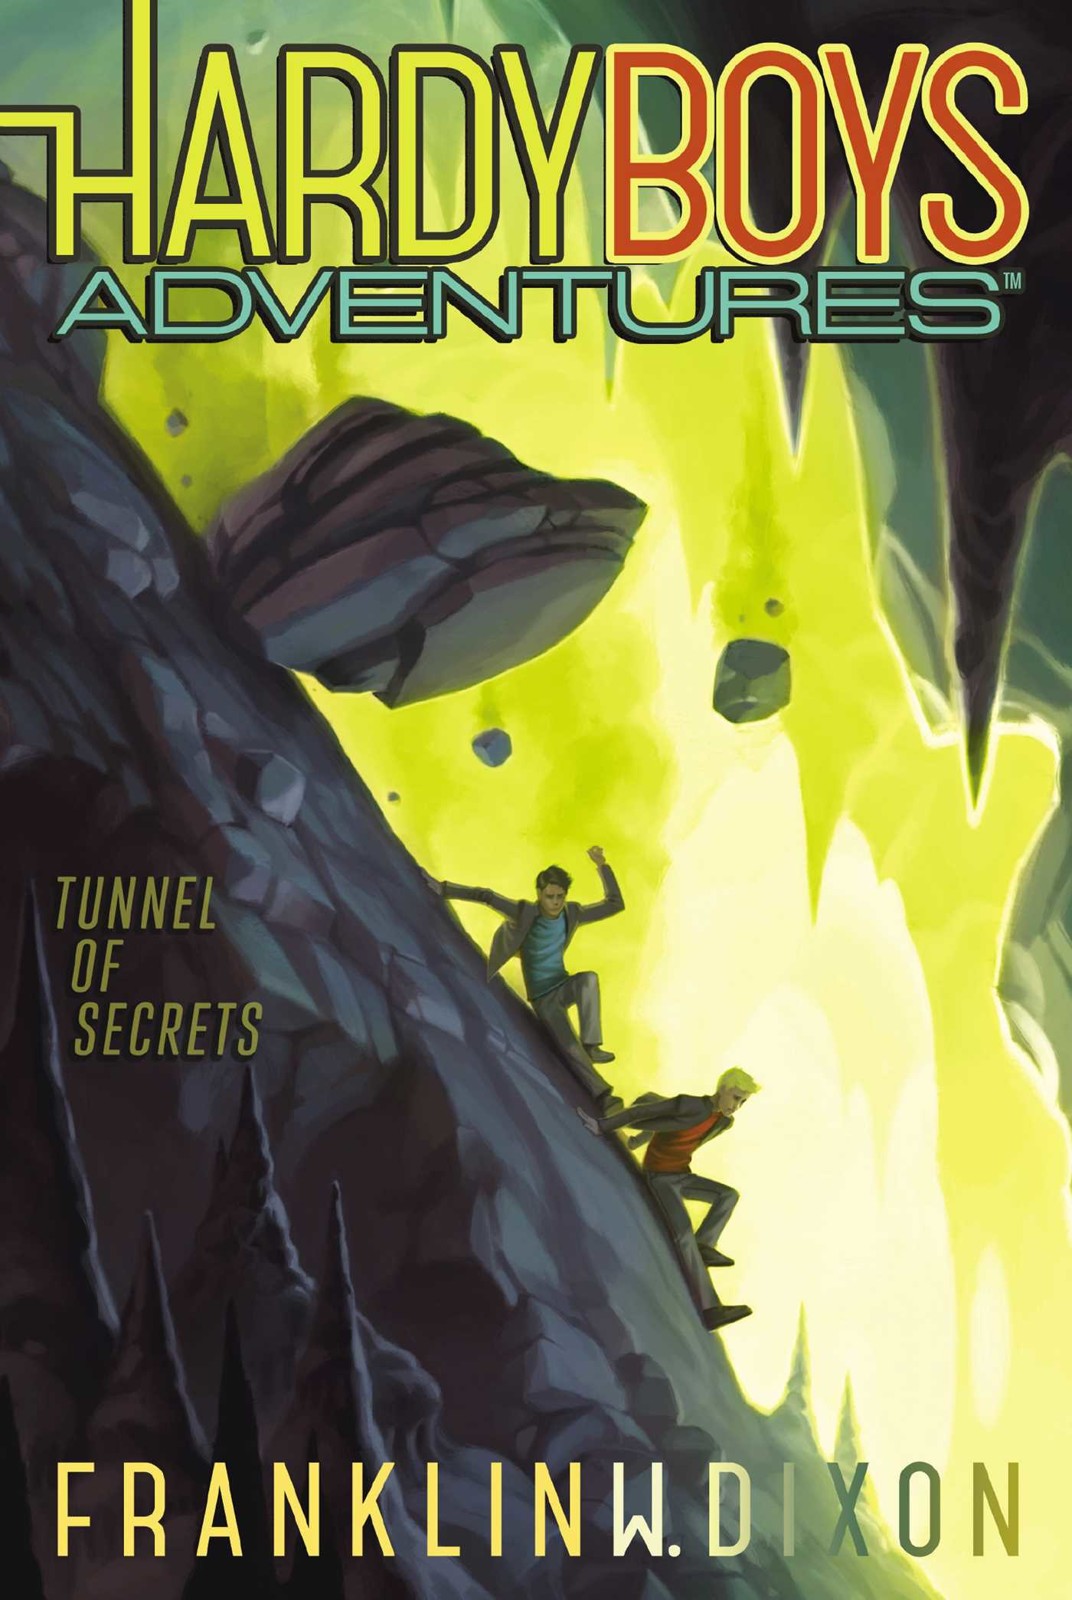 Tunnel of Secrets by Franklin W. Dixon